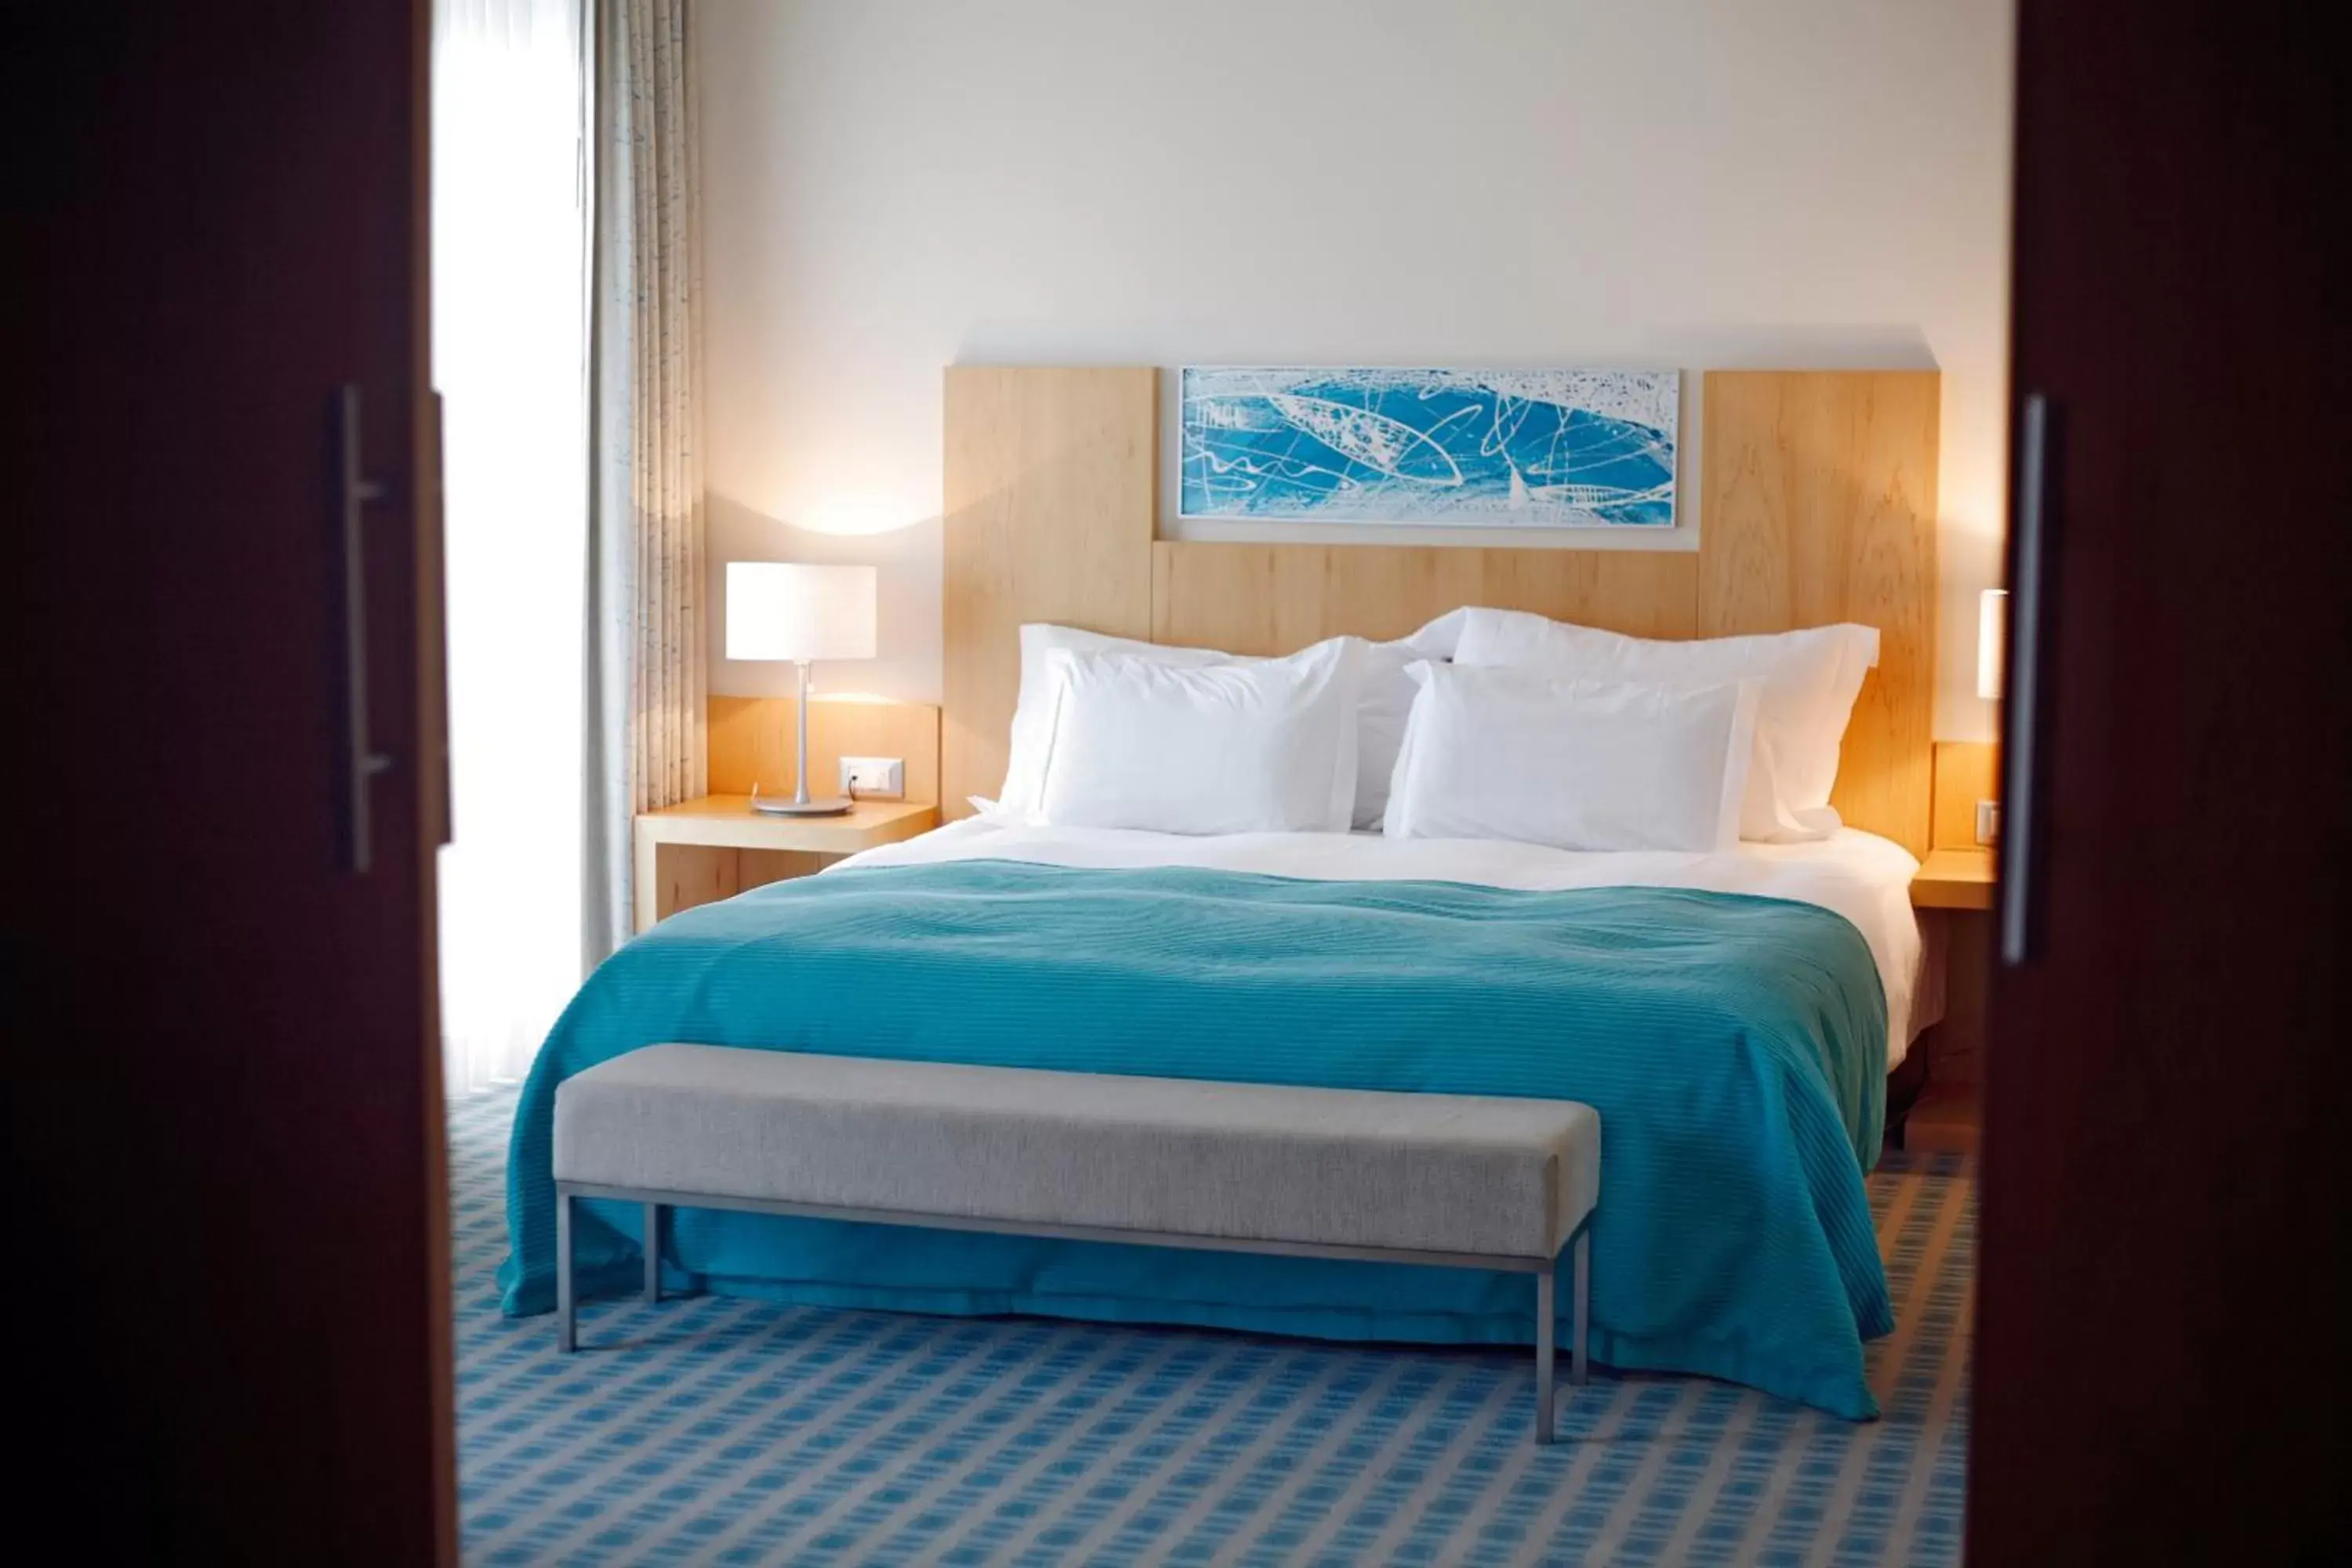 Bed, Room Photo in Hotel Praia